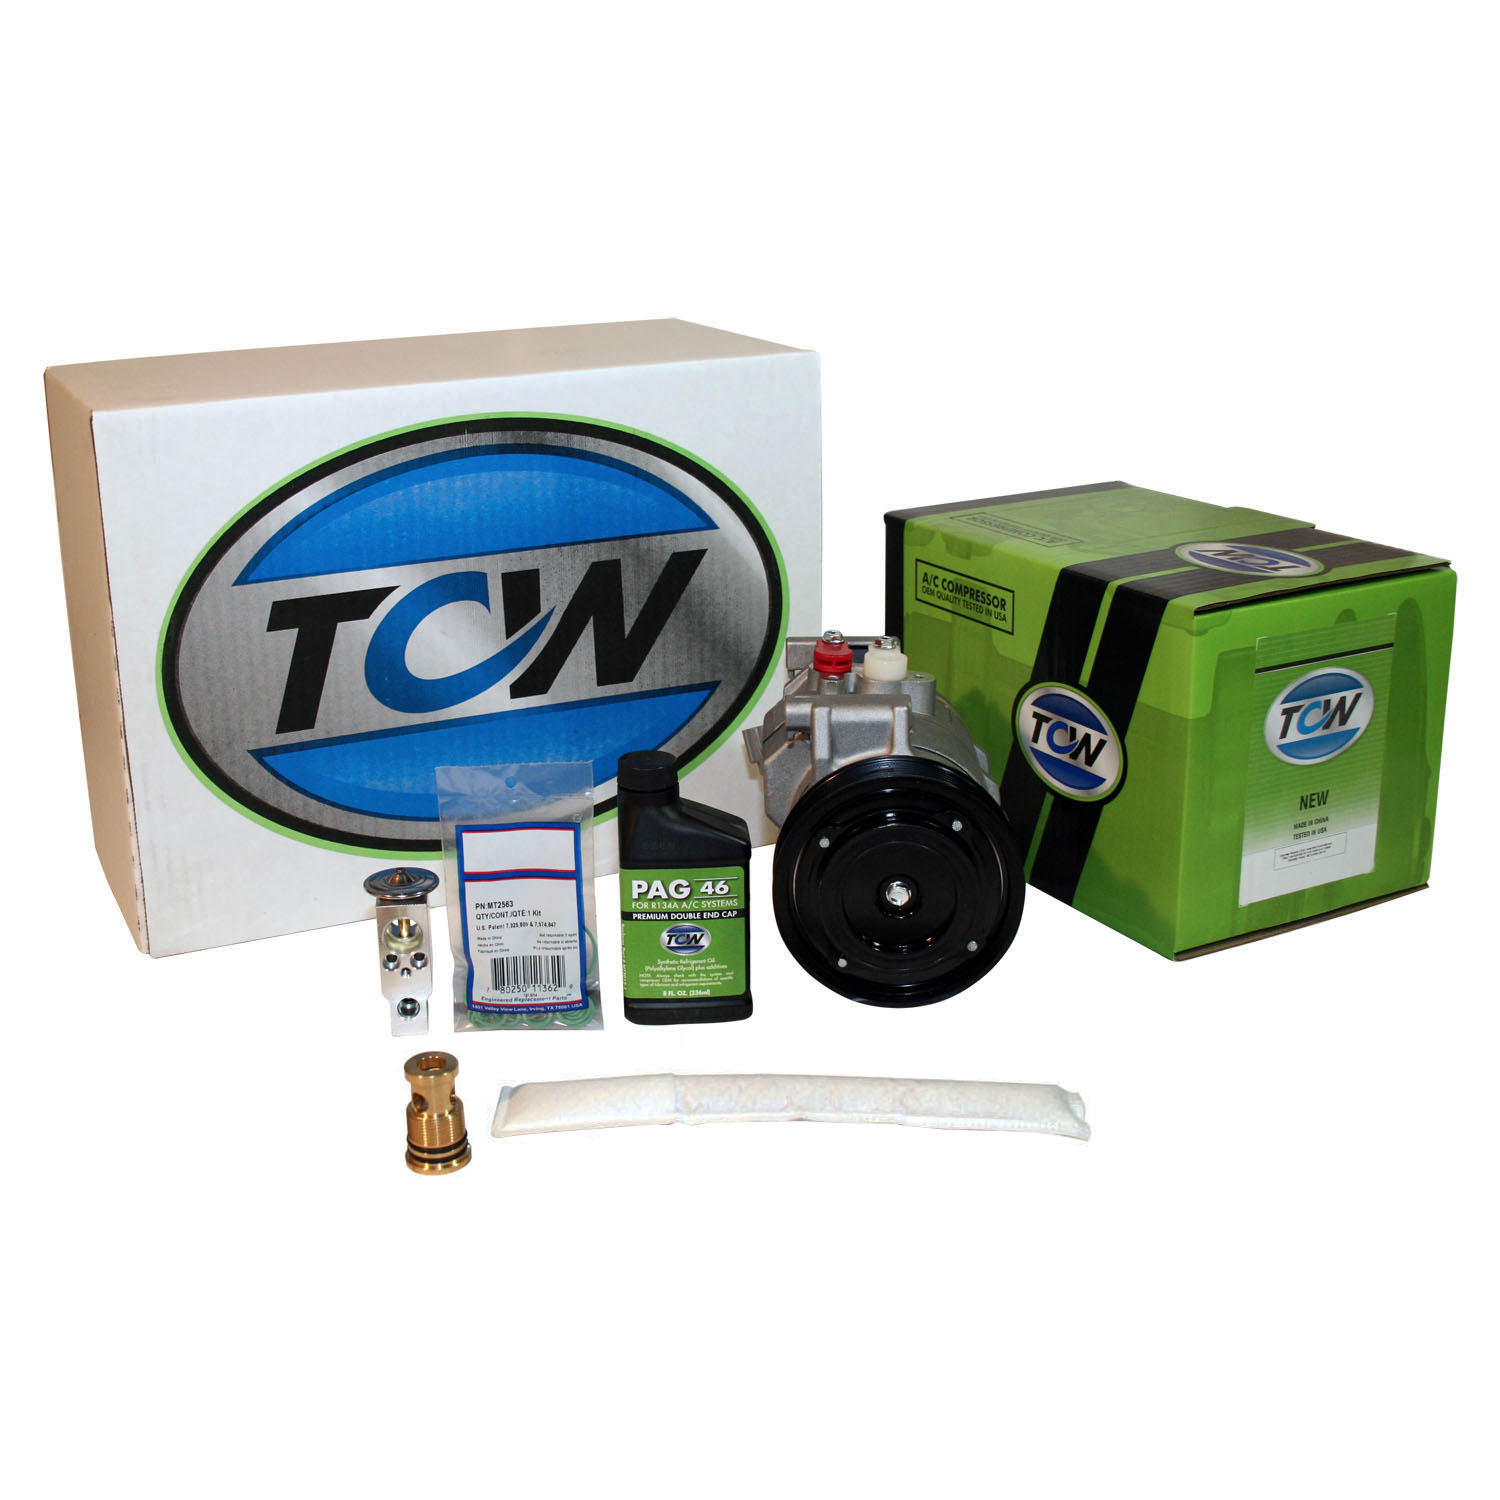 TCW Vehicle A/C Kit K1000386N New Product Image field_60b6a13a6e67c